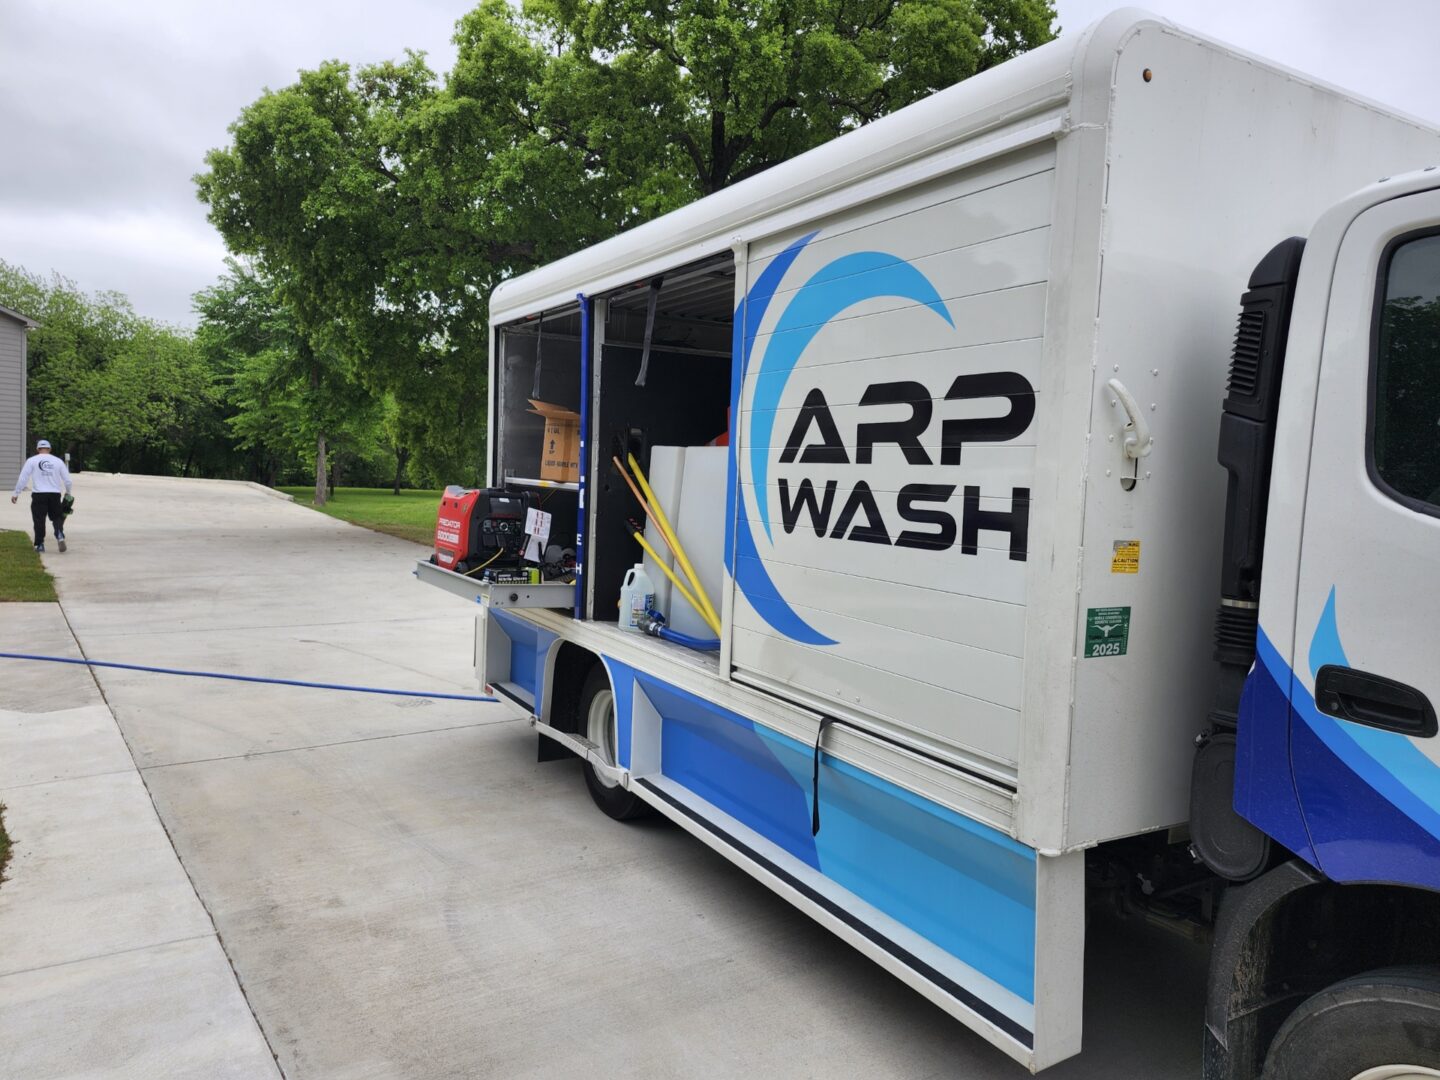 ARP Wash driveway washing